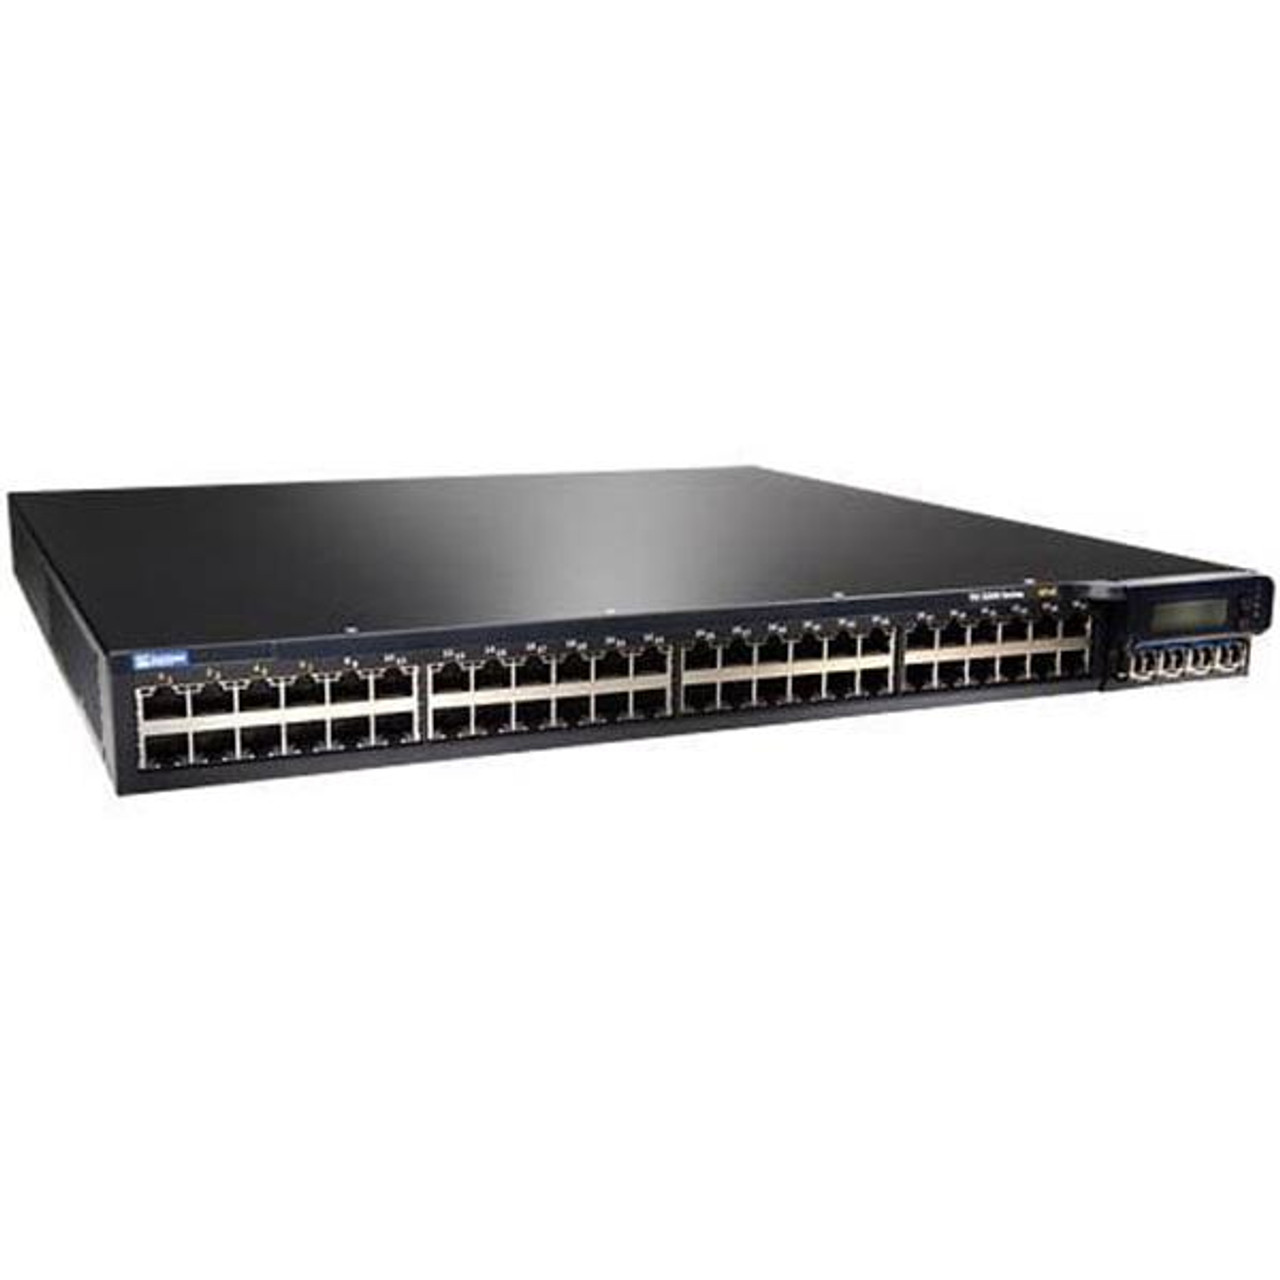 750-033068 Juniper EX 3200 48-Ports 10/100/1000Base-T (8 PoE ports) Network Switch with 320W AC PSU (Refurbished)